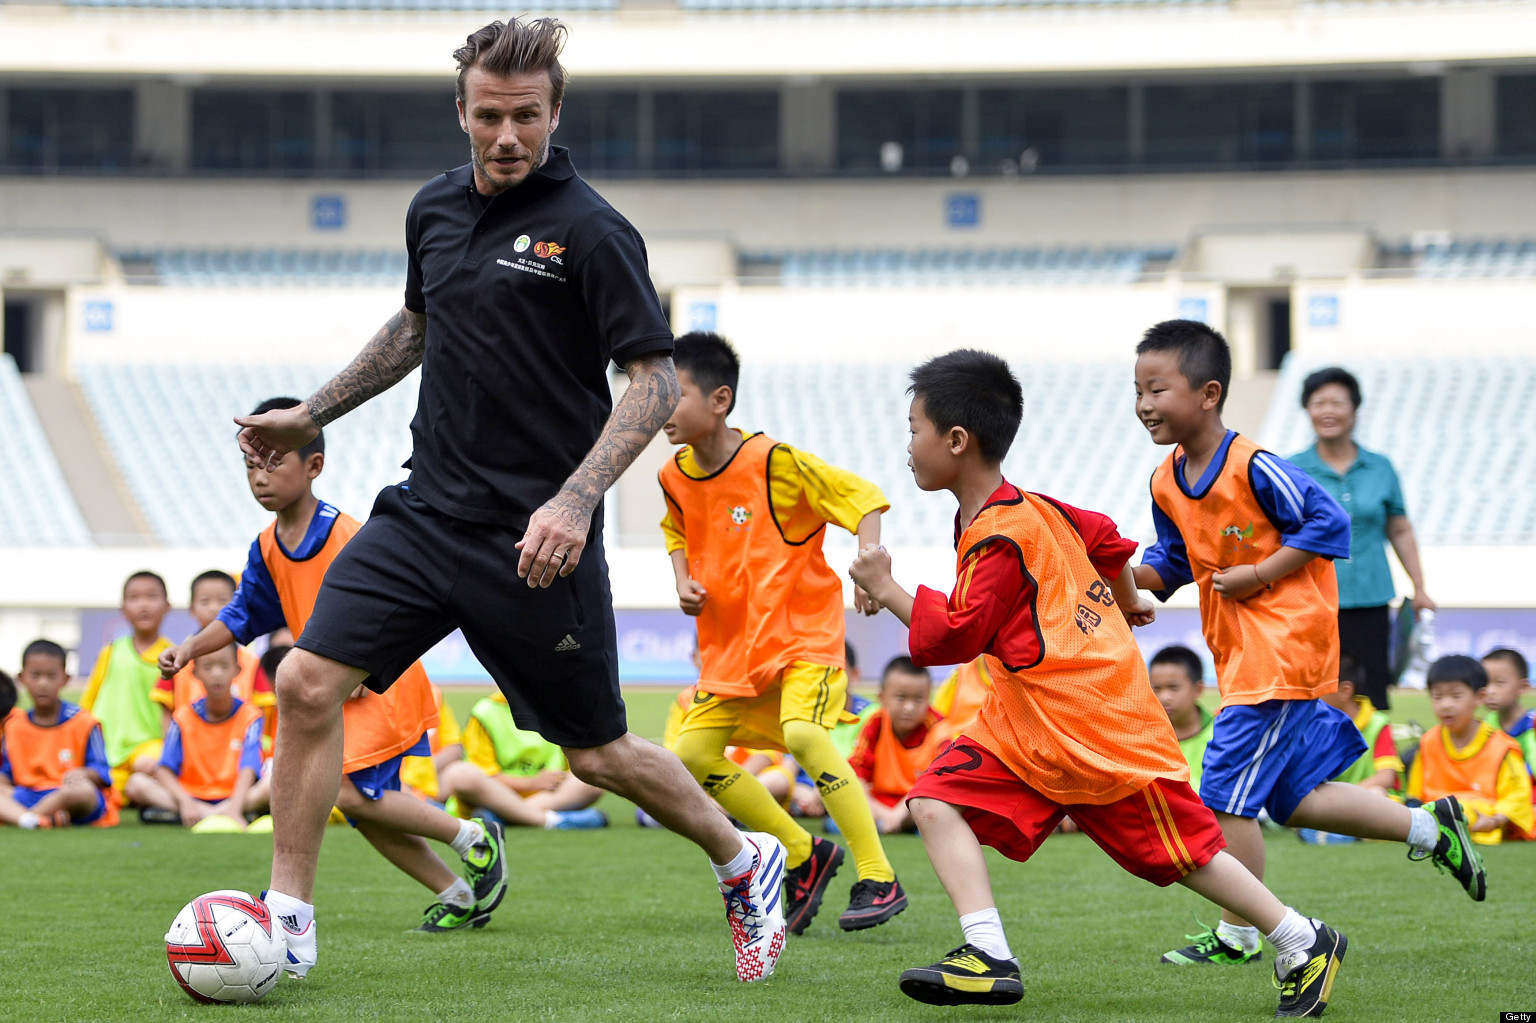 David Beckham: To make the children proud of me - David Beckham, Charity, UNICEF, Children, Longpost